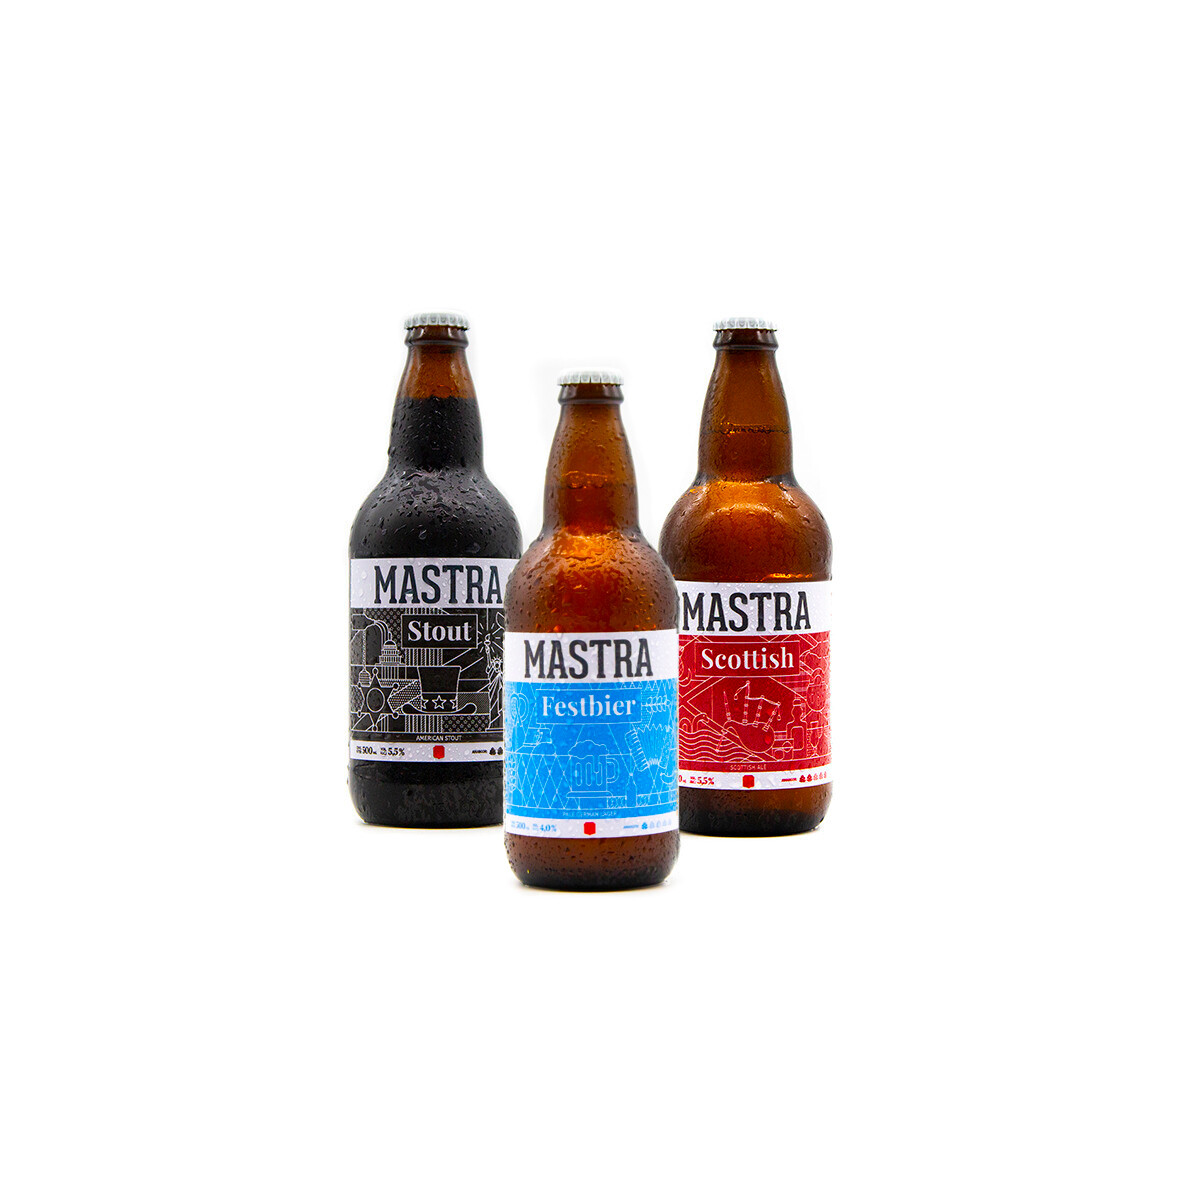 Cerveza Mastra Festbier Scottish/Stout 3 unidades - 500 ml 